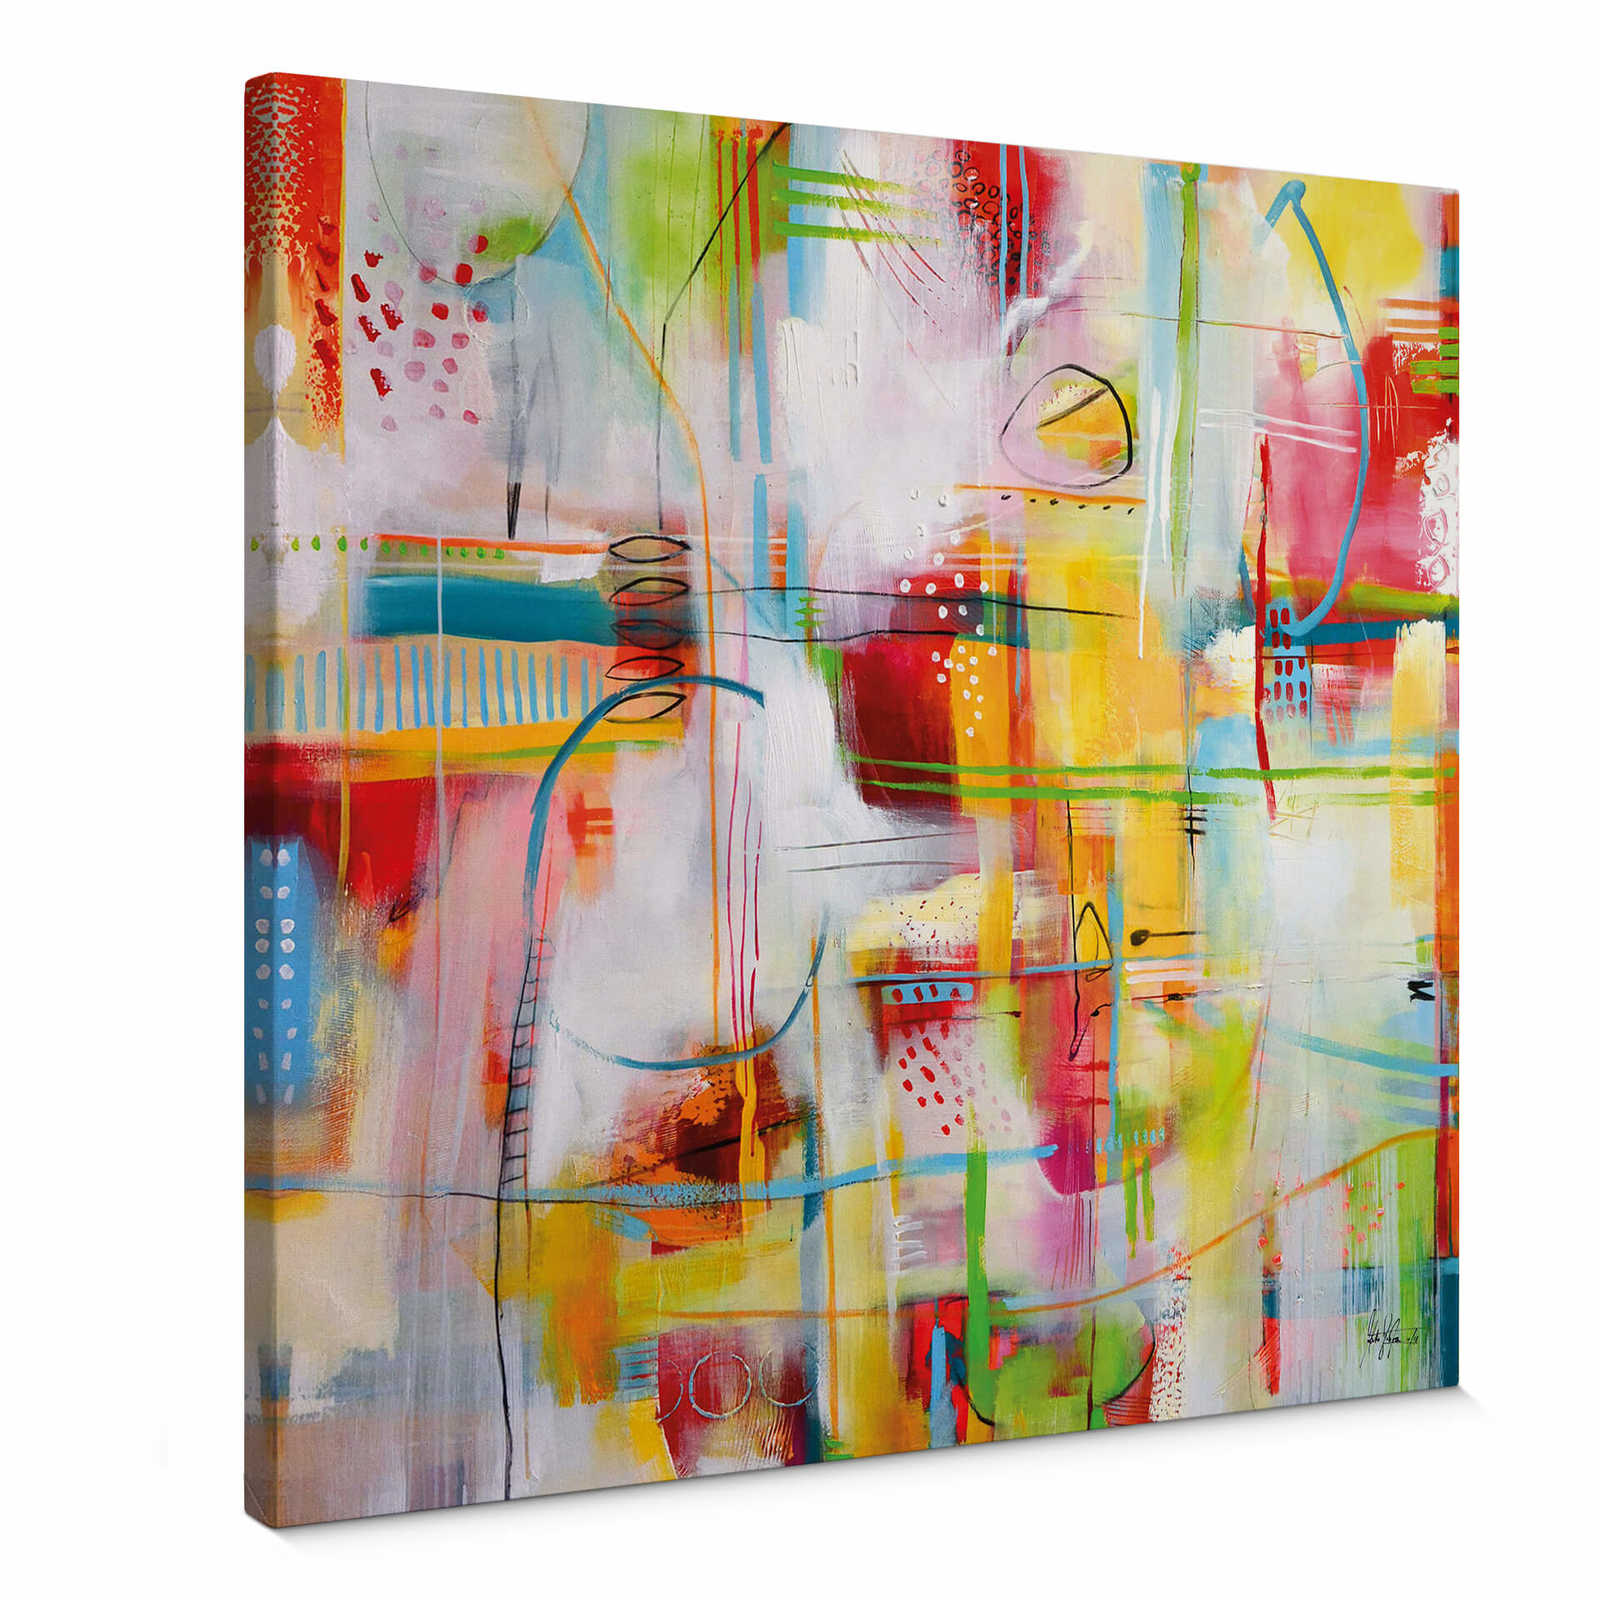         Canvas print abstract art by Fedrau – Colourful
    